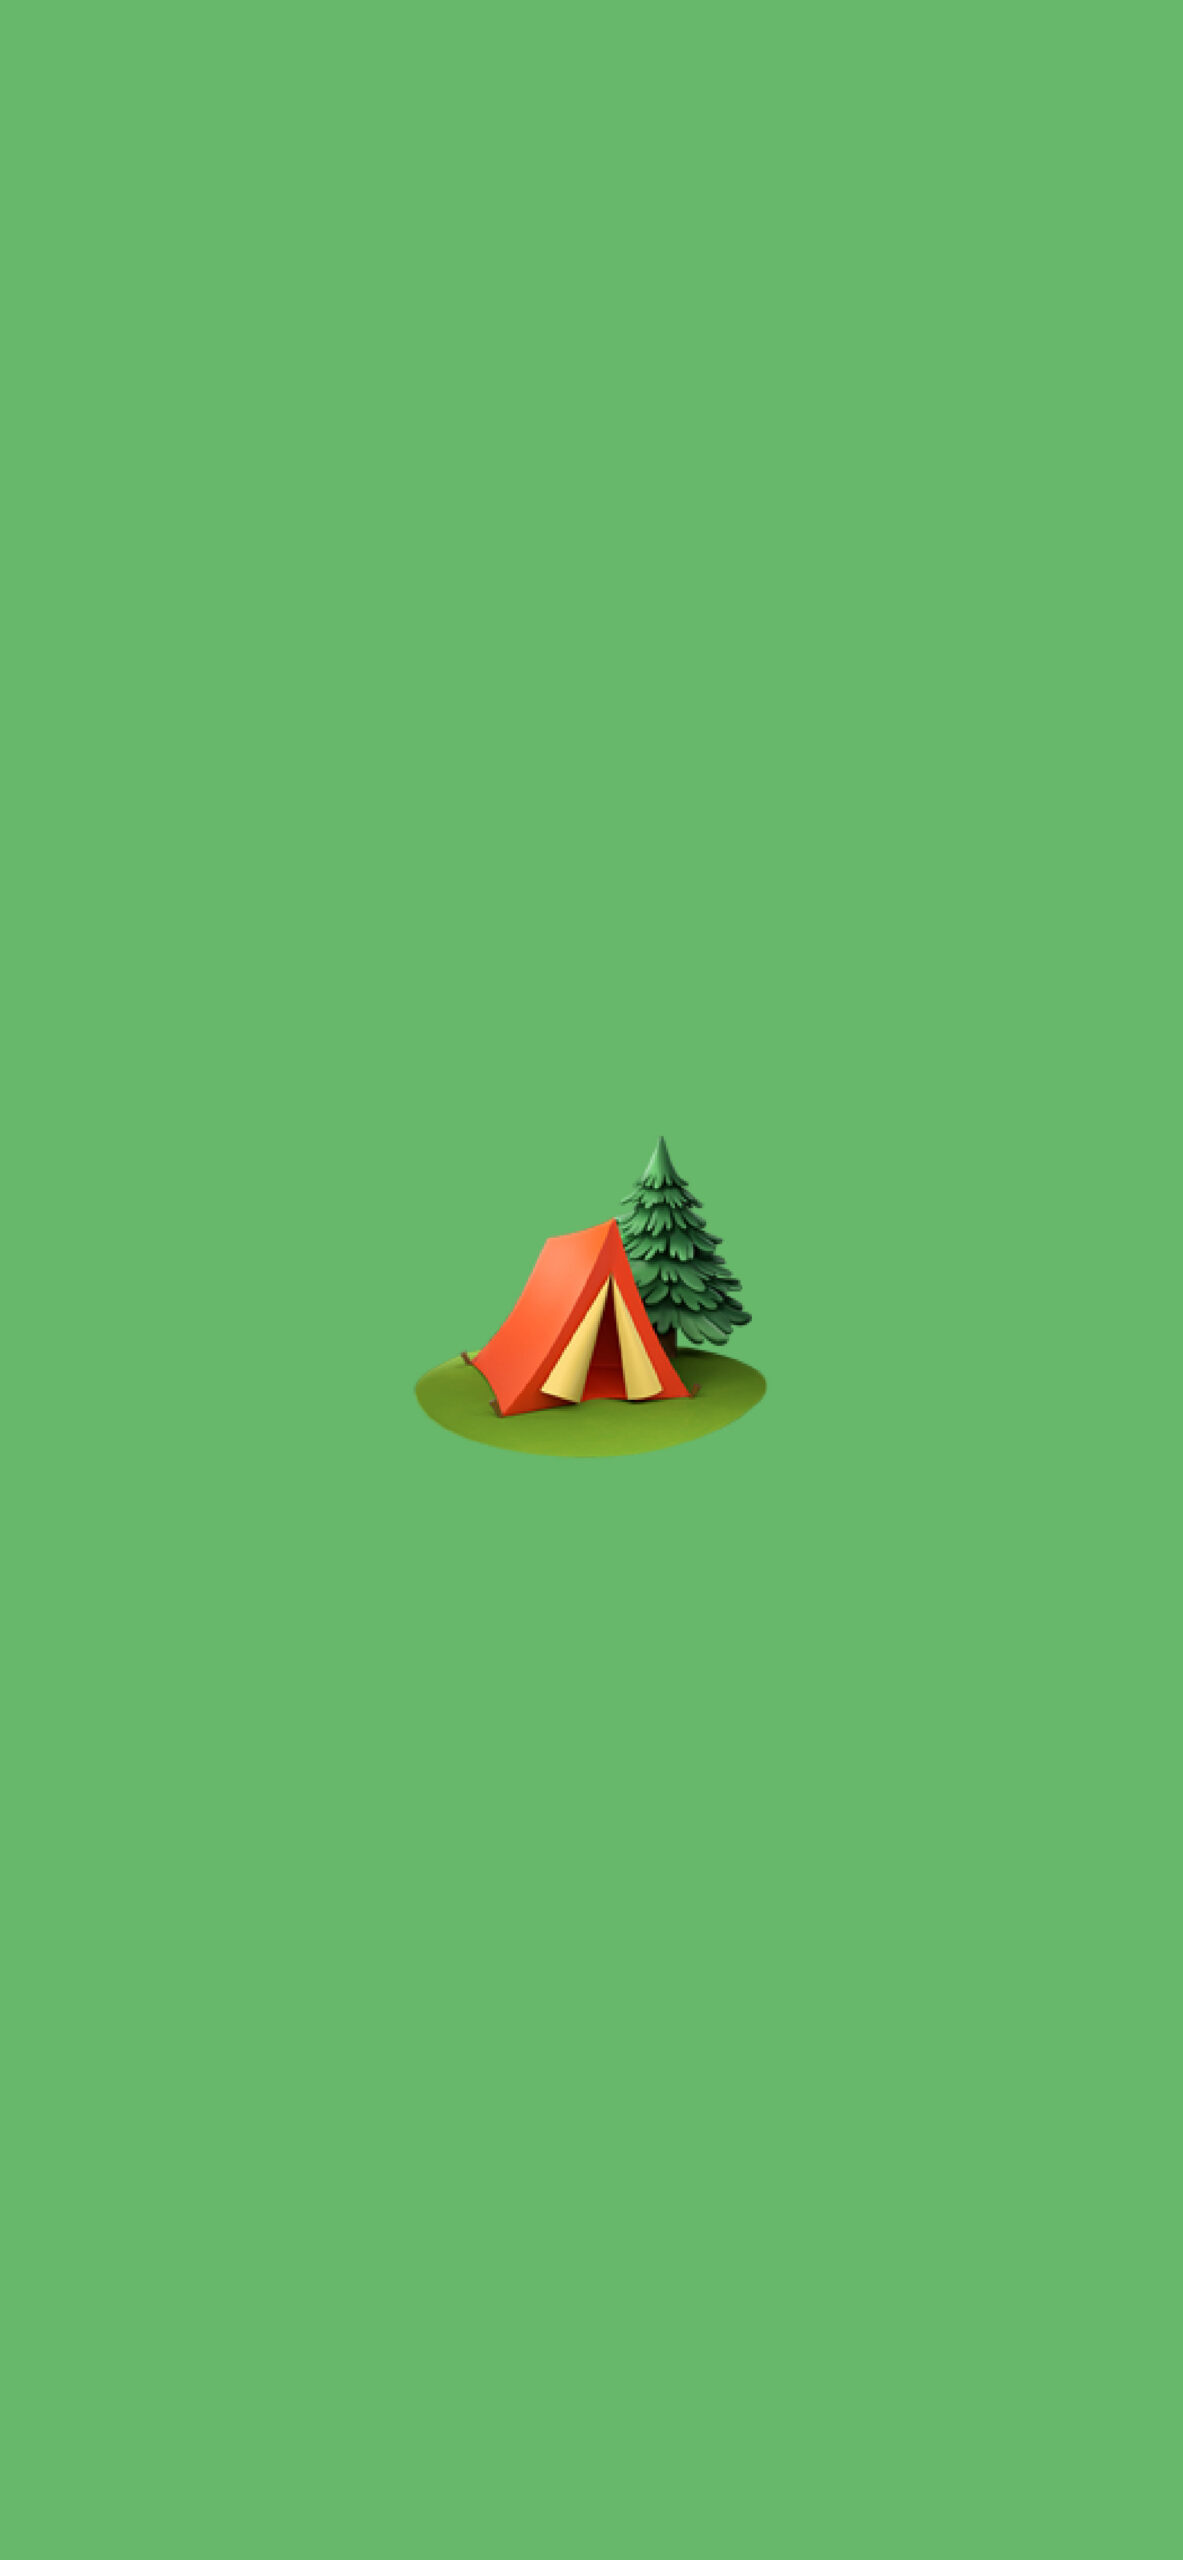 Minimalist Emoji Wallpaper with Camping, Beach & Desert